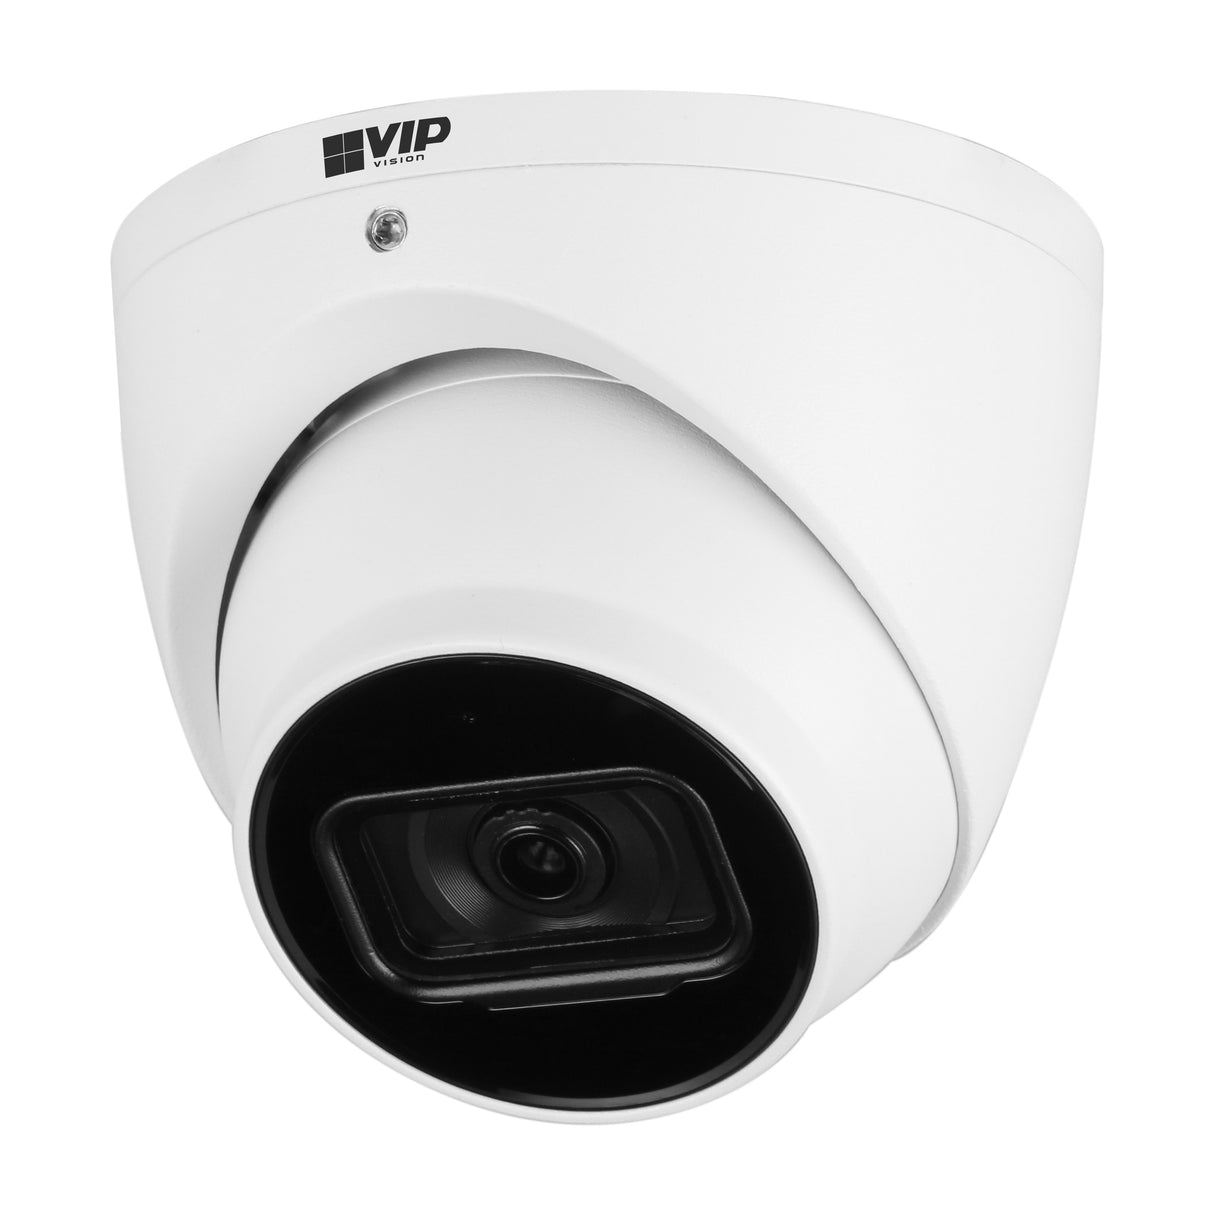 VIP Vision AI Security System: 2x 8MP AI Turret Cams, 16MP WatchGuard 4CH AI NVR